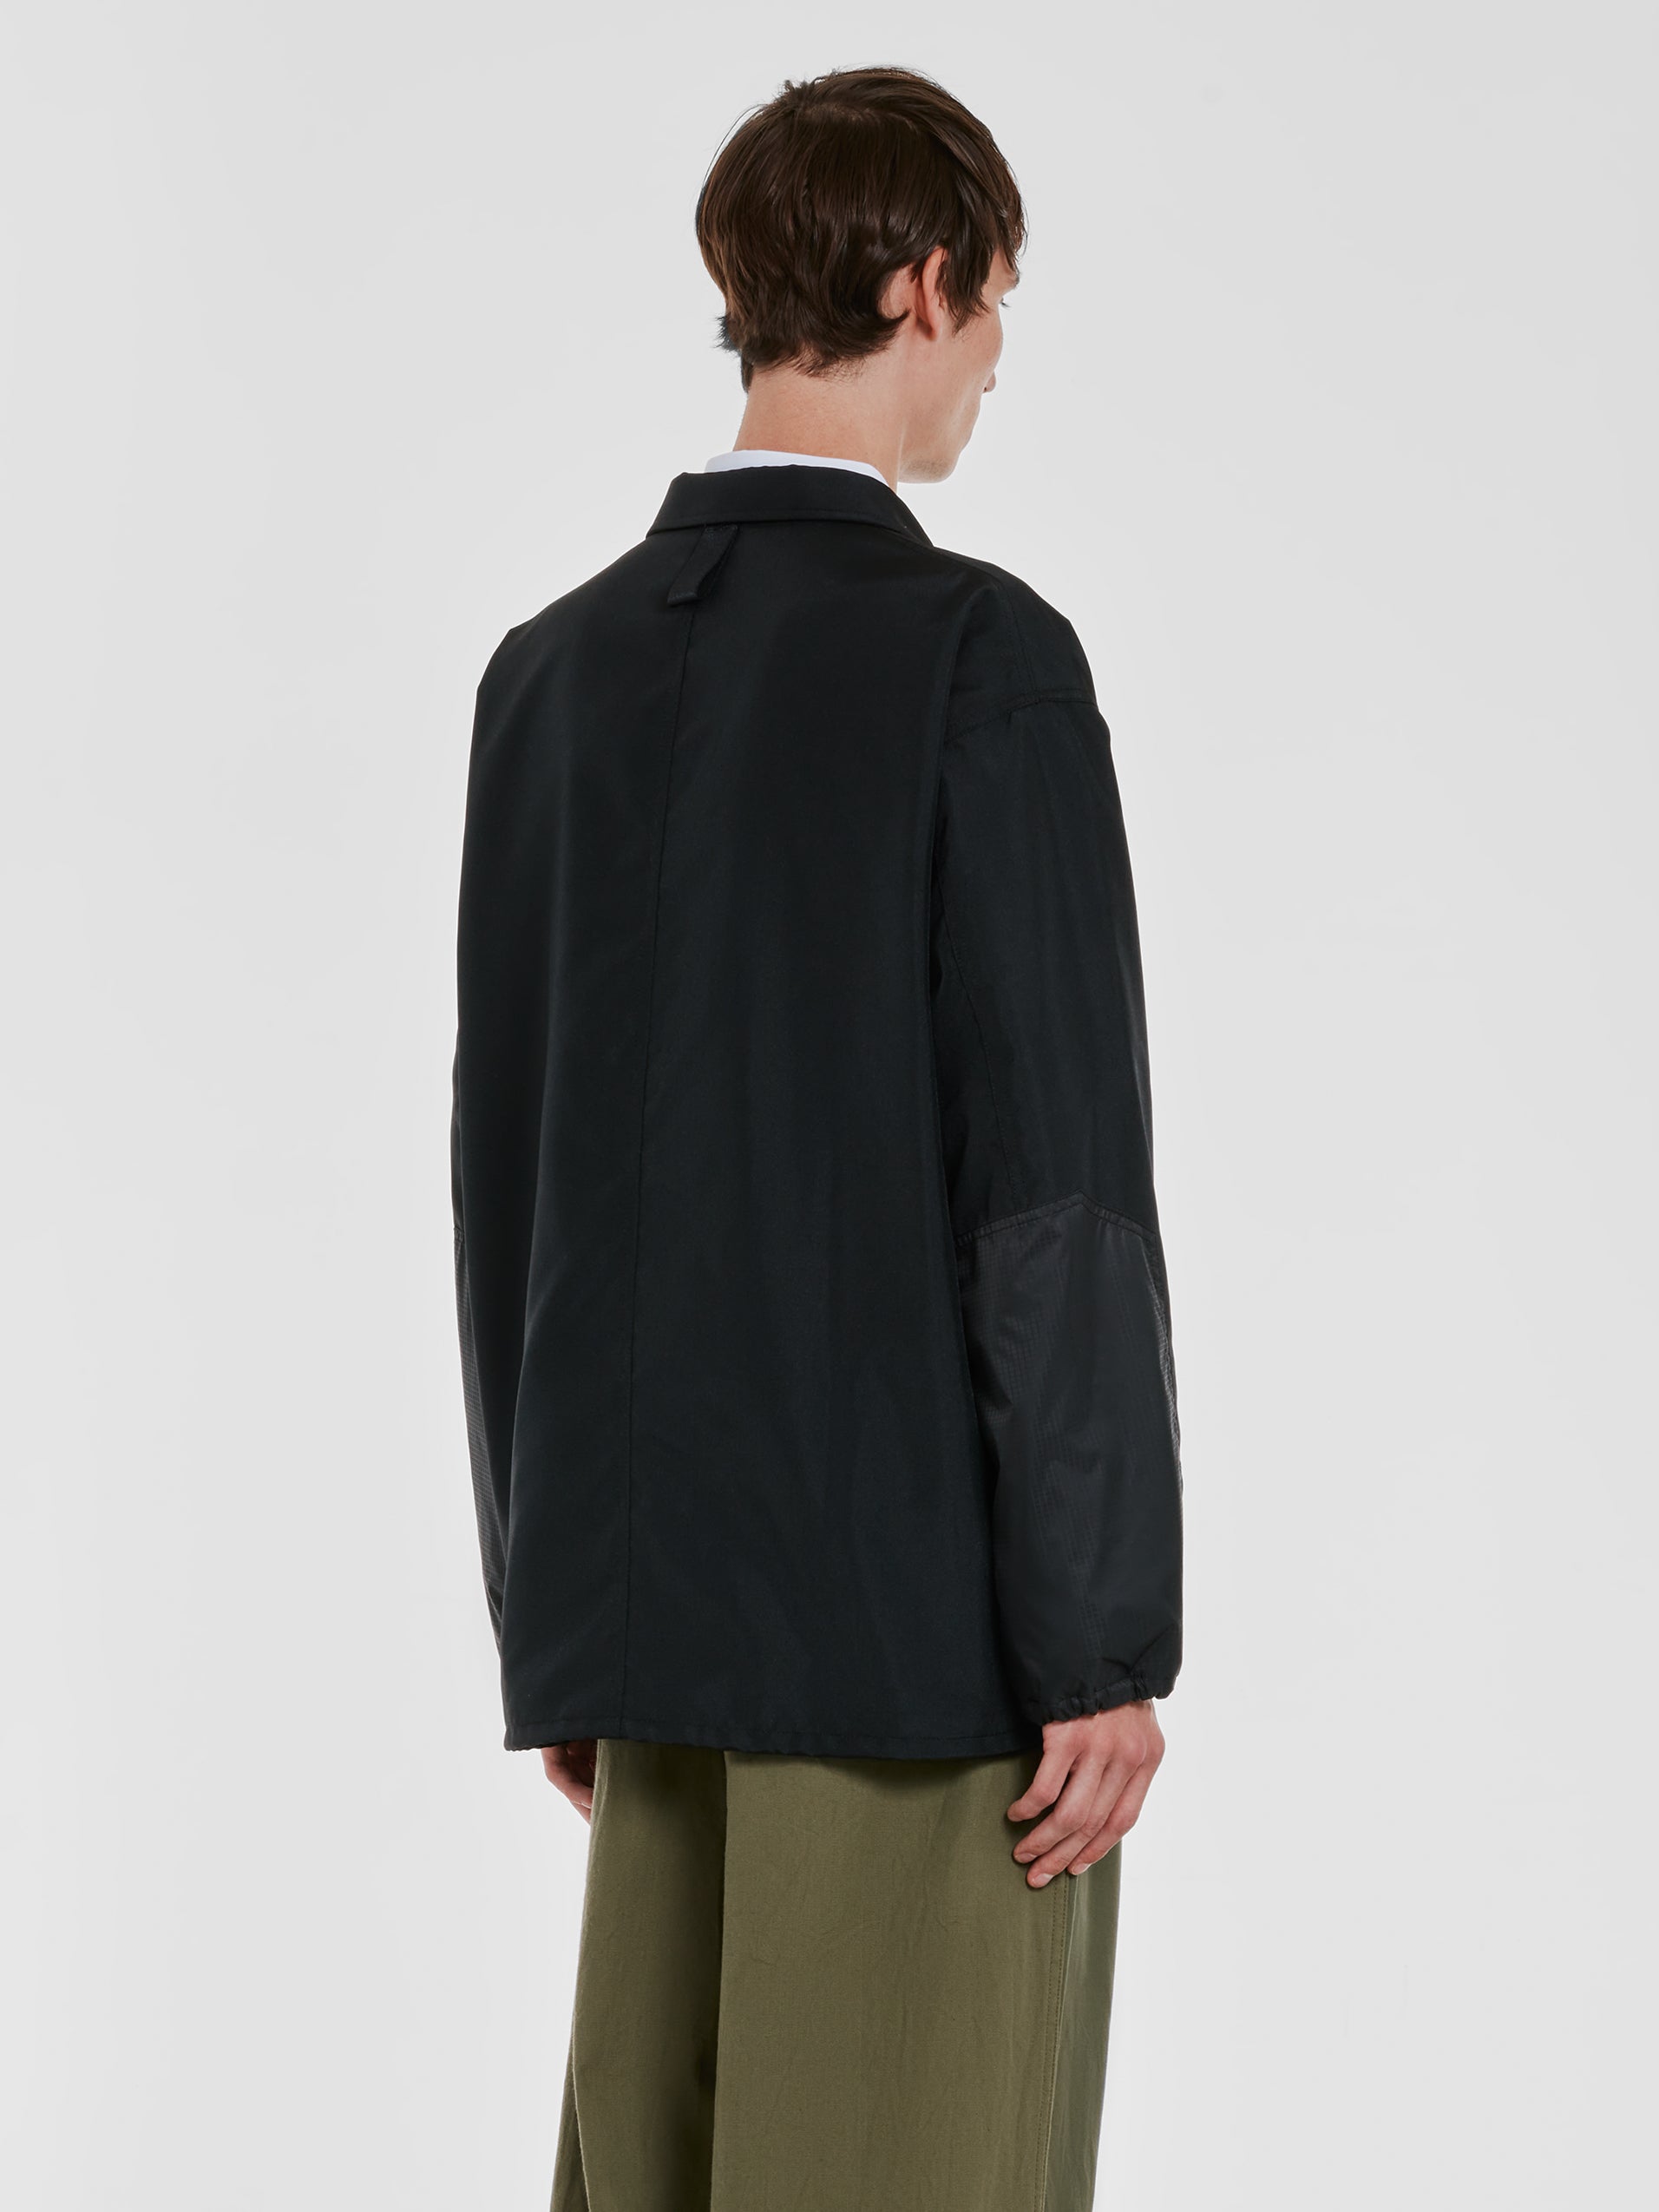 Comme des Garçons Homme - Men’s Polyester Relaxed Jacket - (Black) view 3